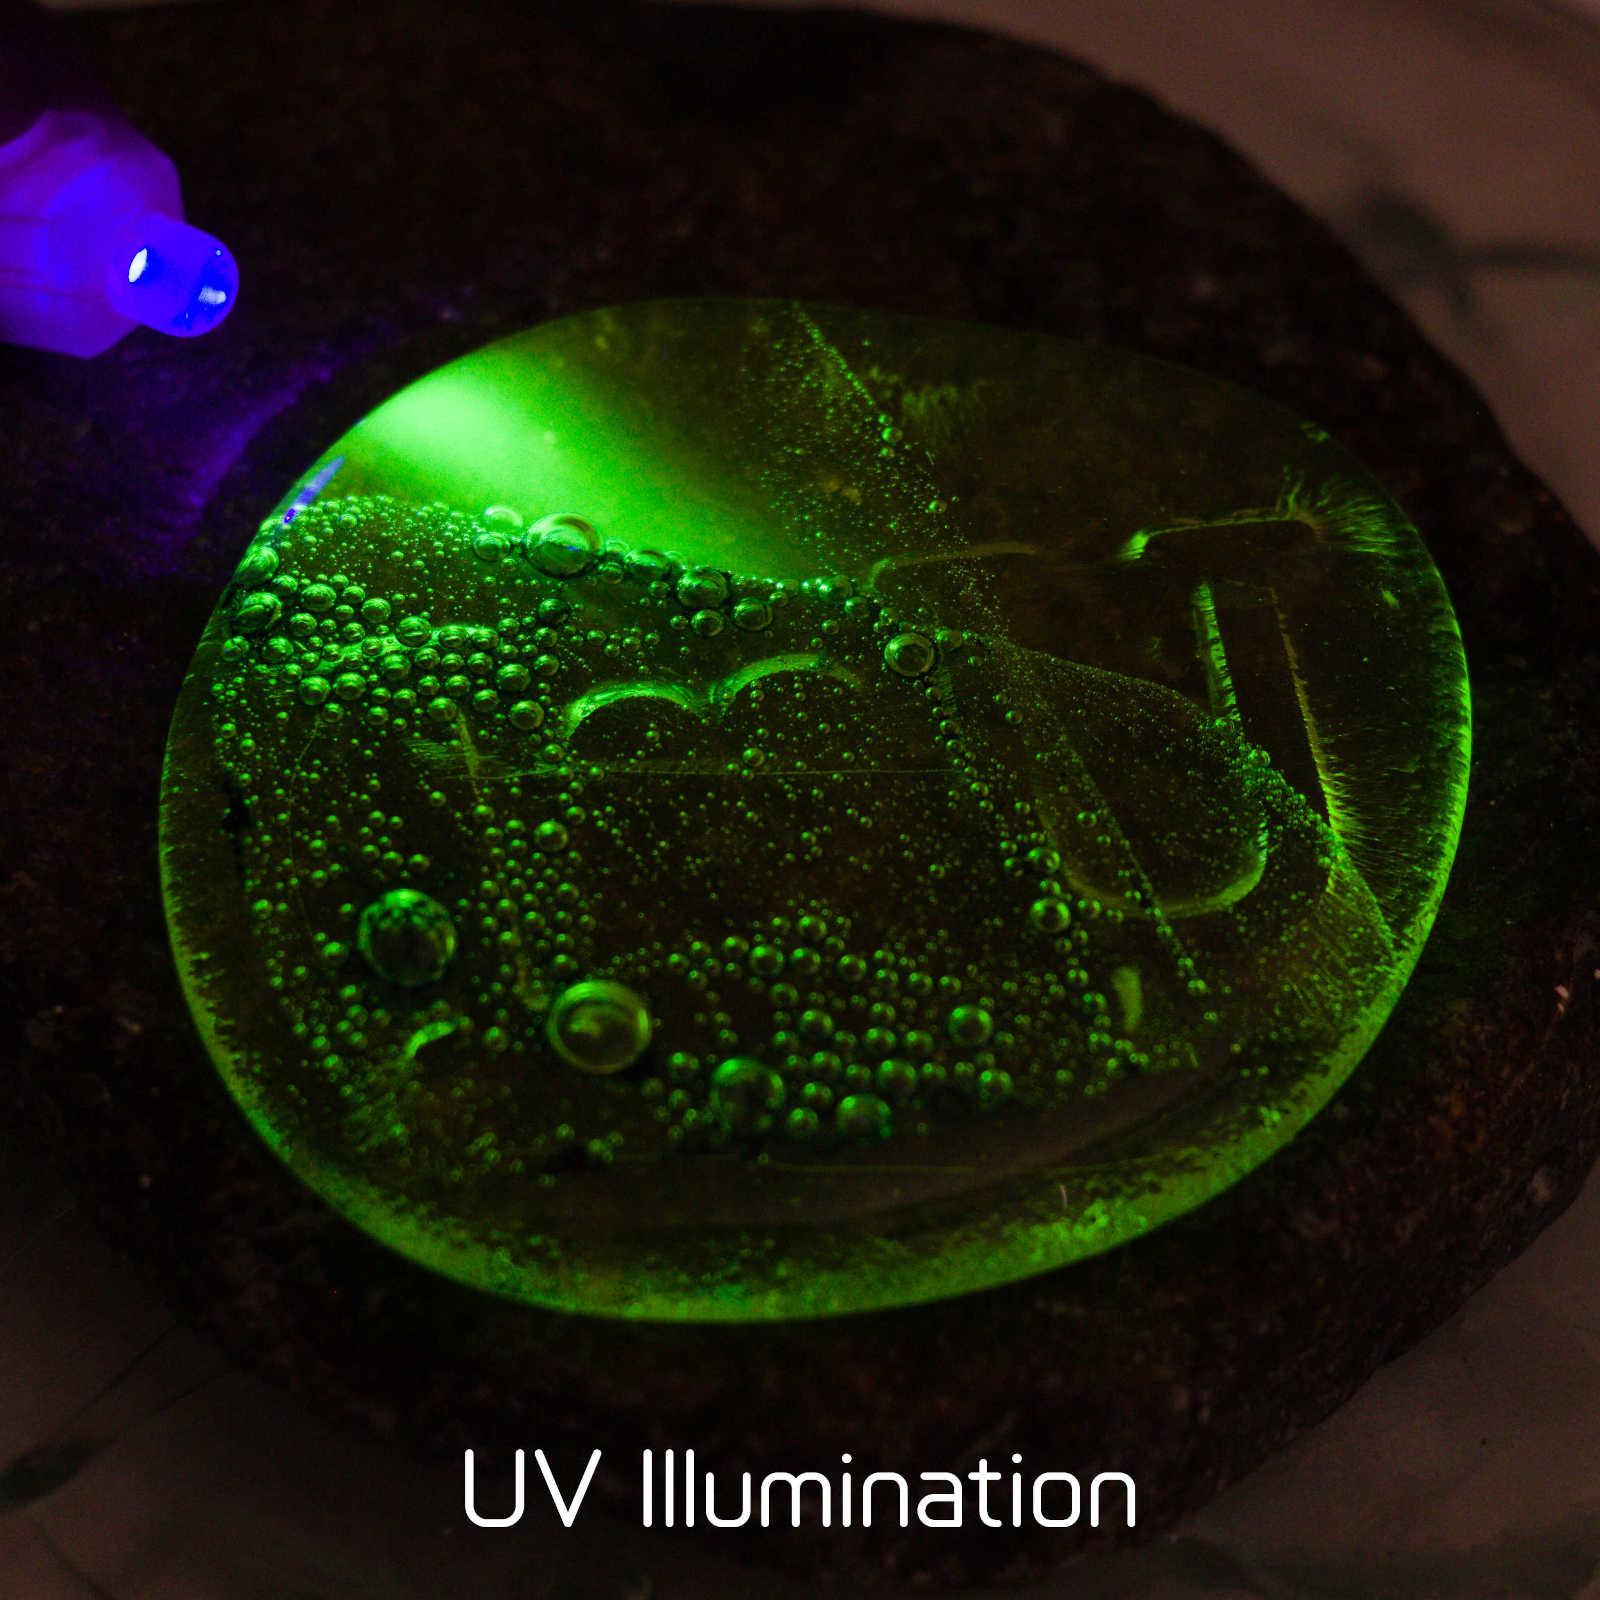 Uranium glass display piece under UV light